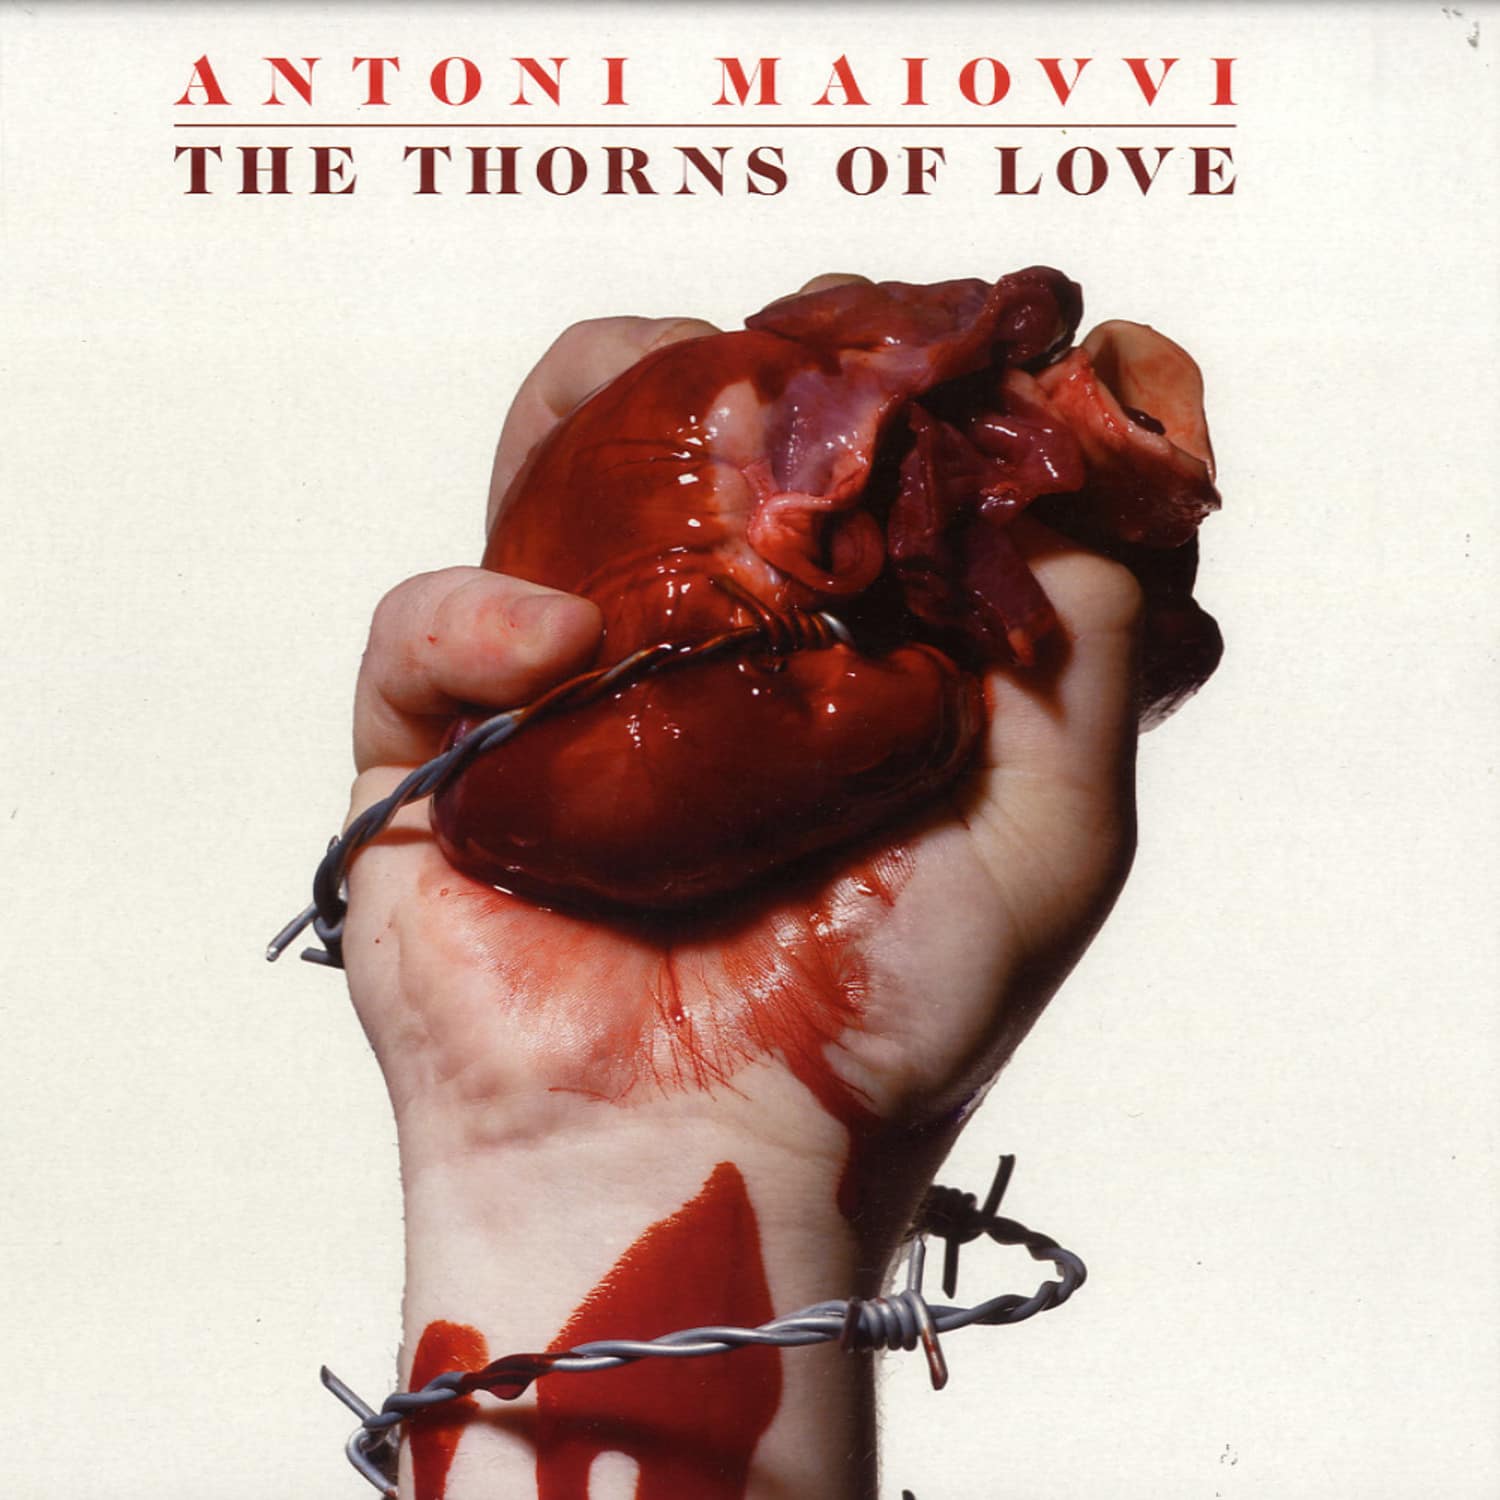 Antoni Maiovvi - THE THORNS OF LOVE 